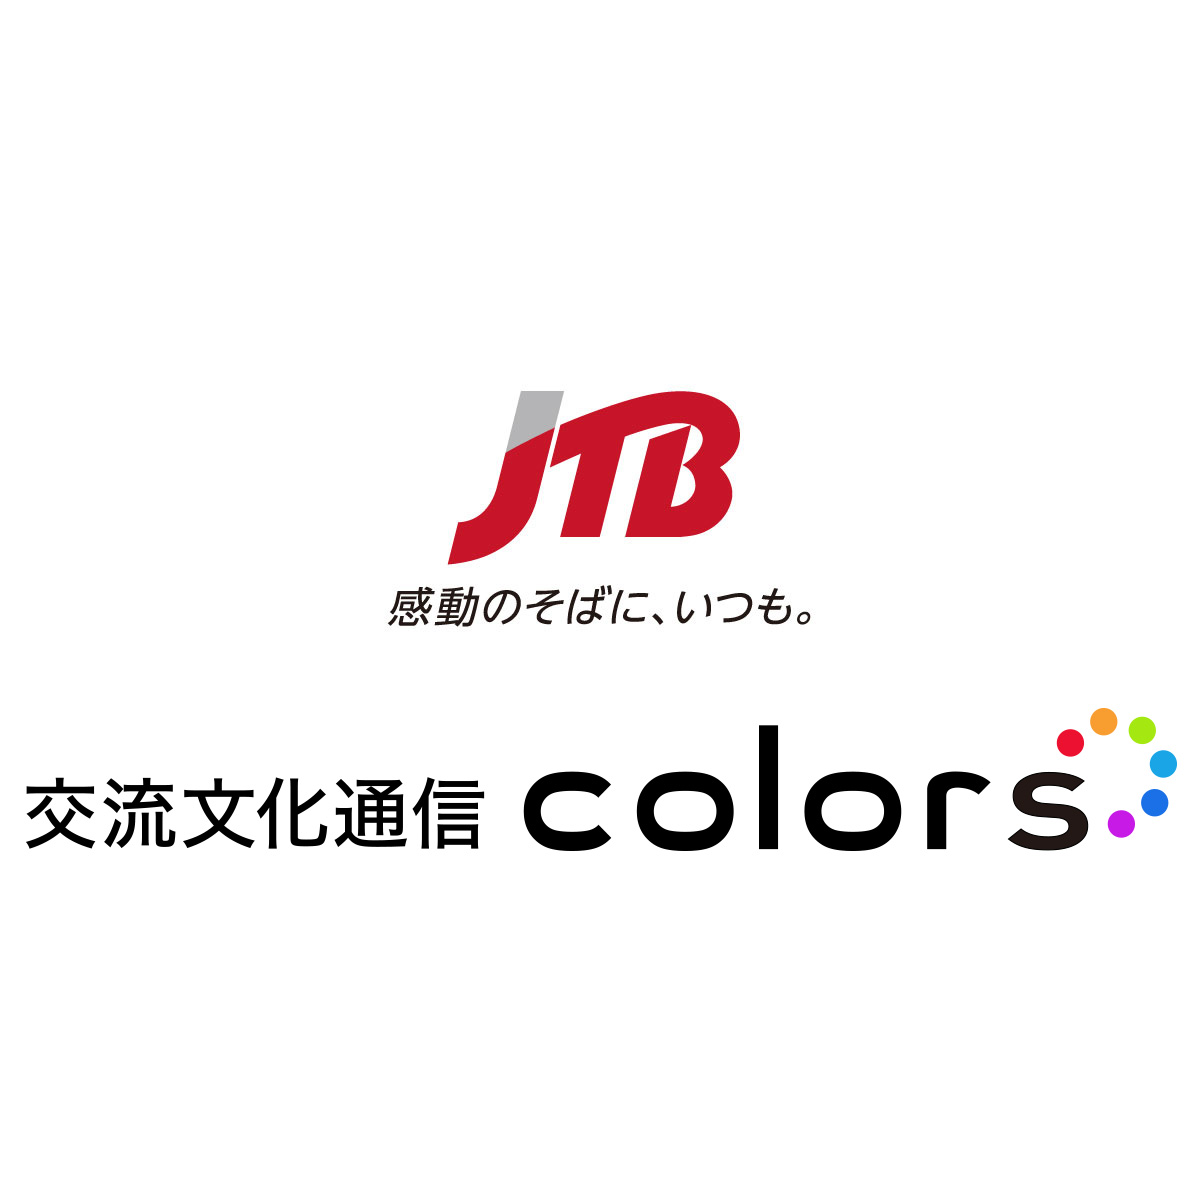 交流文化通信 colors | JTBグループの地域活性化・交流文化事業